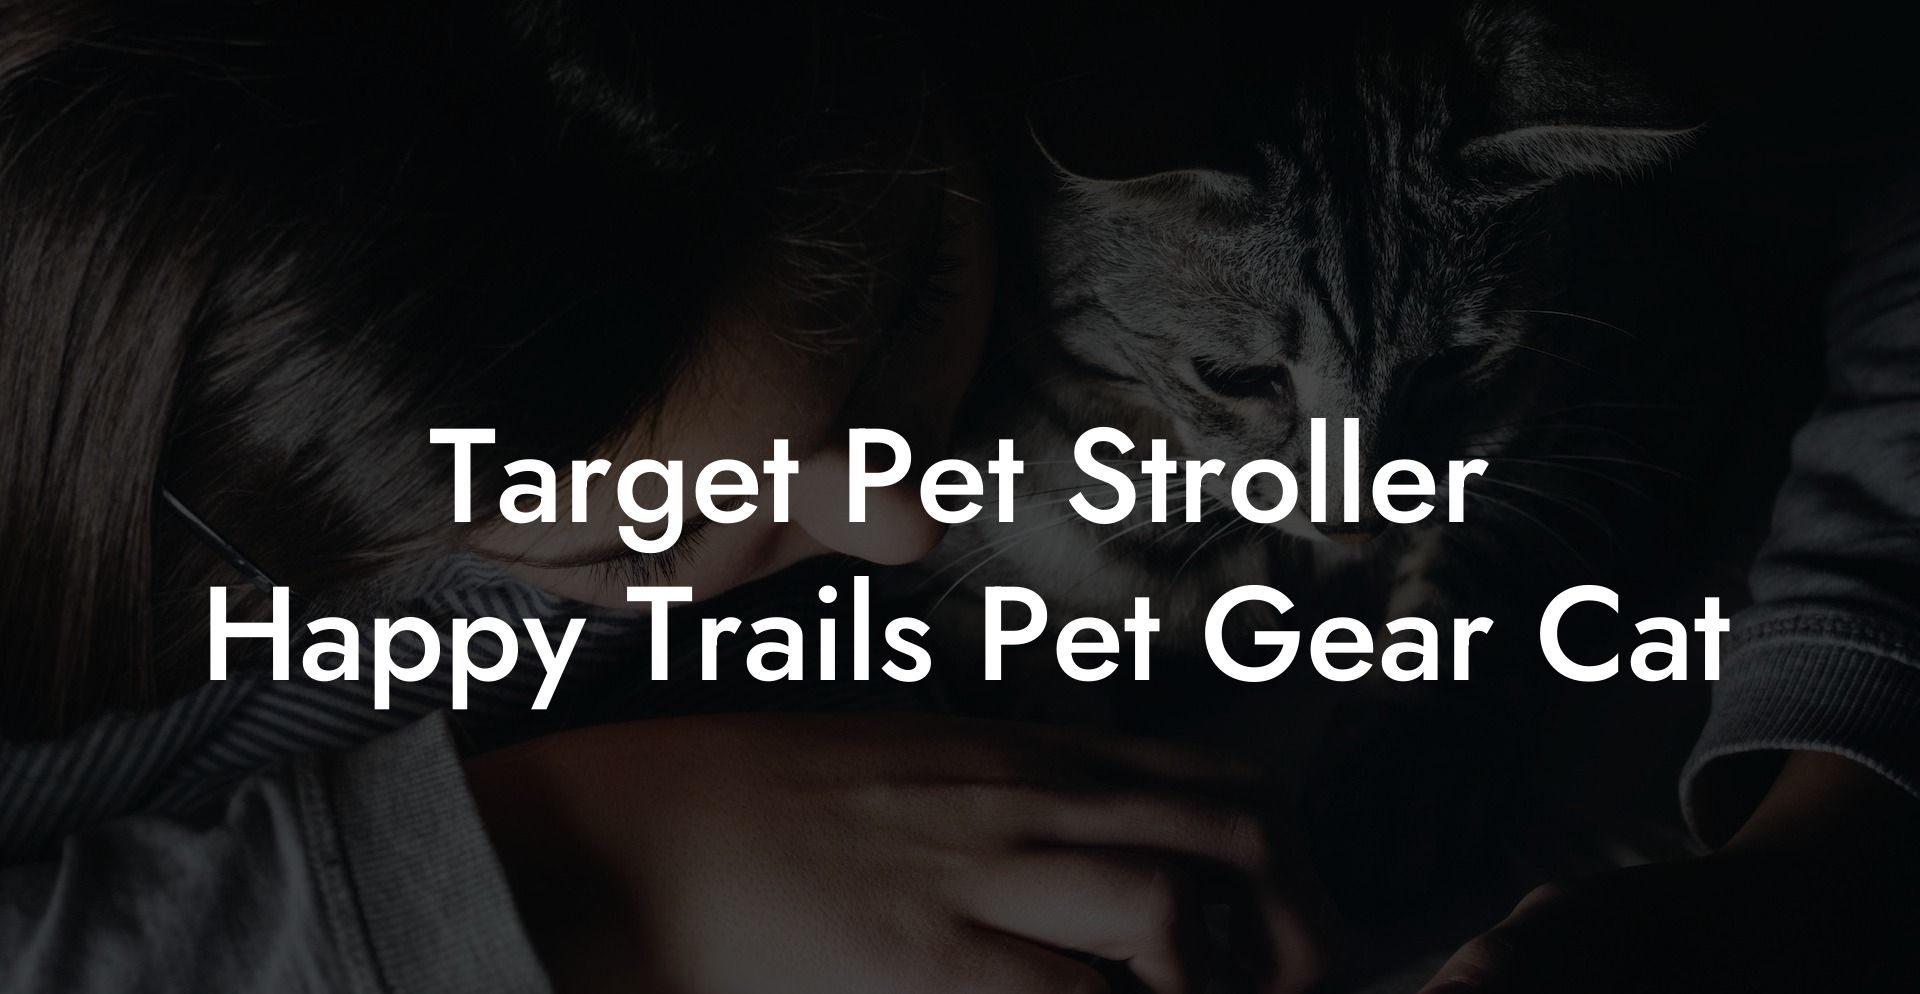 Target Pet Stroller Happy Trails Pet Gear Cat